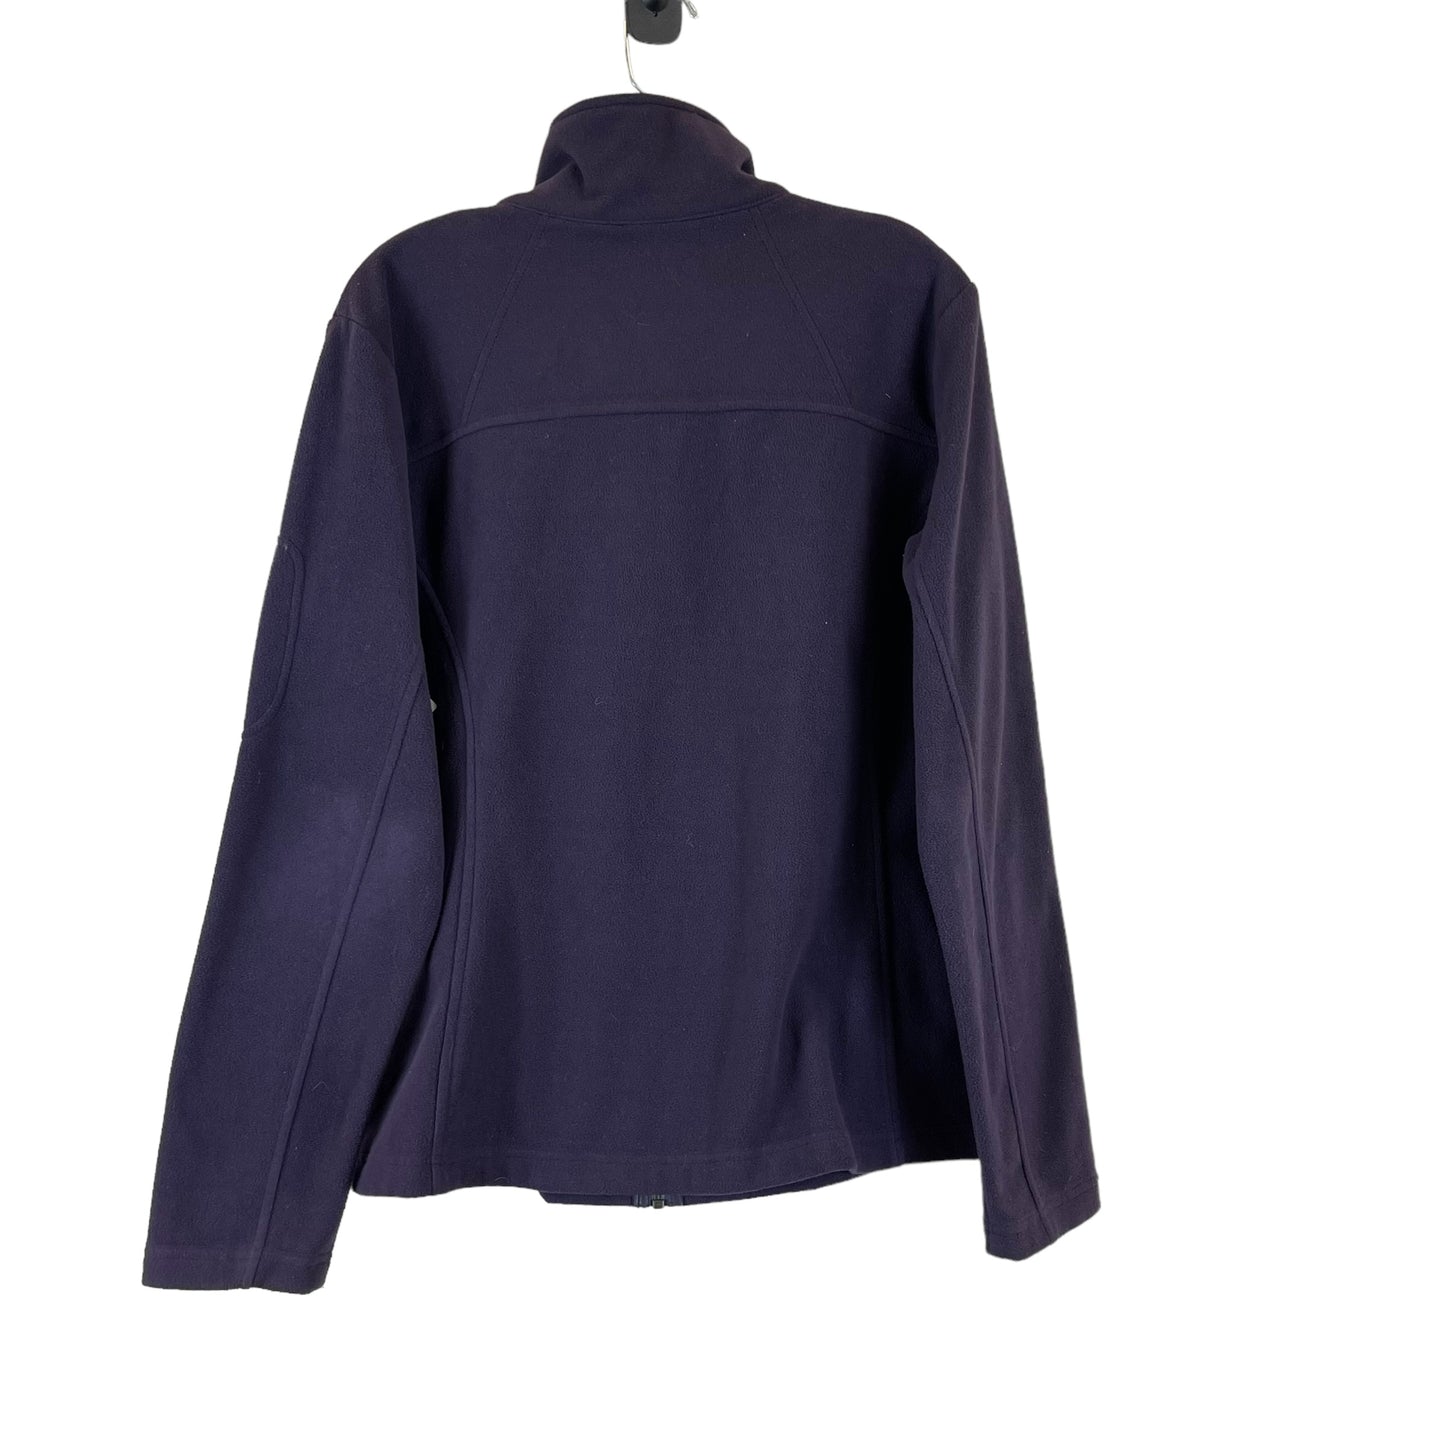 Jacket Fleece By Columbia  Size: L